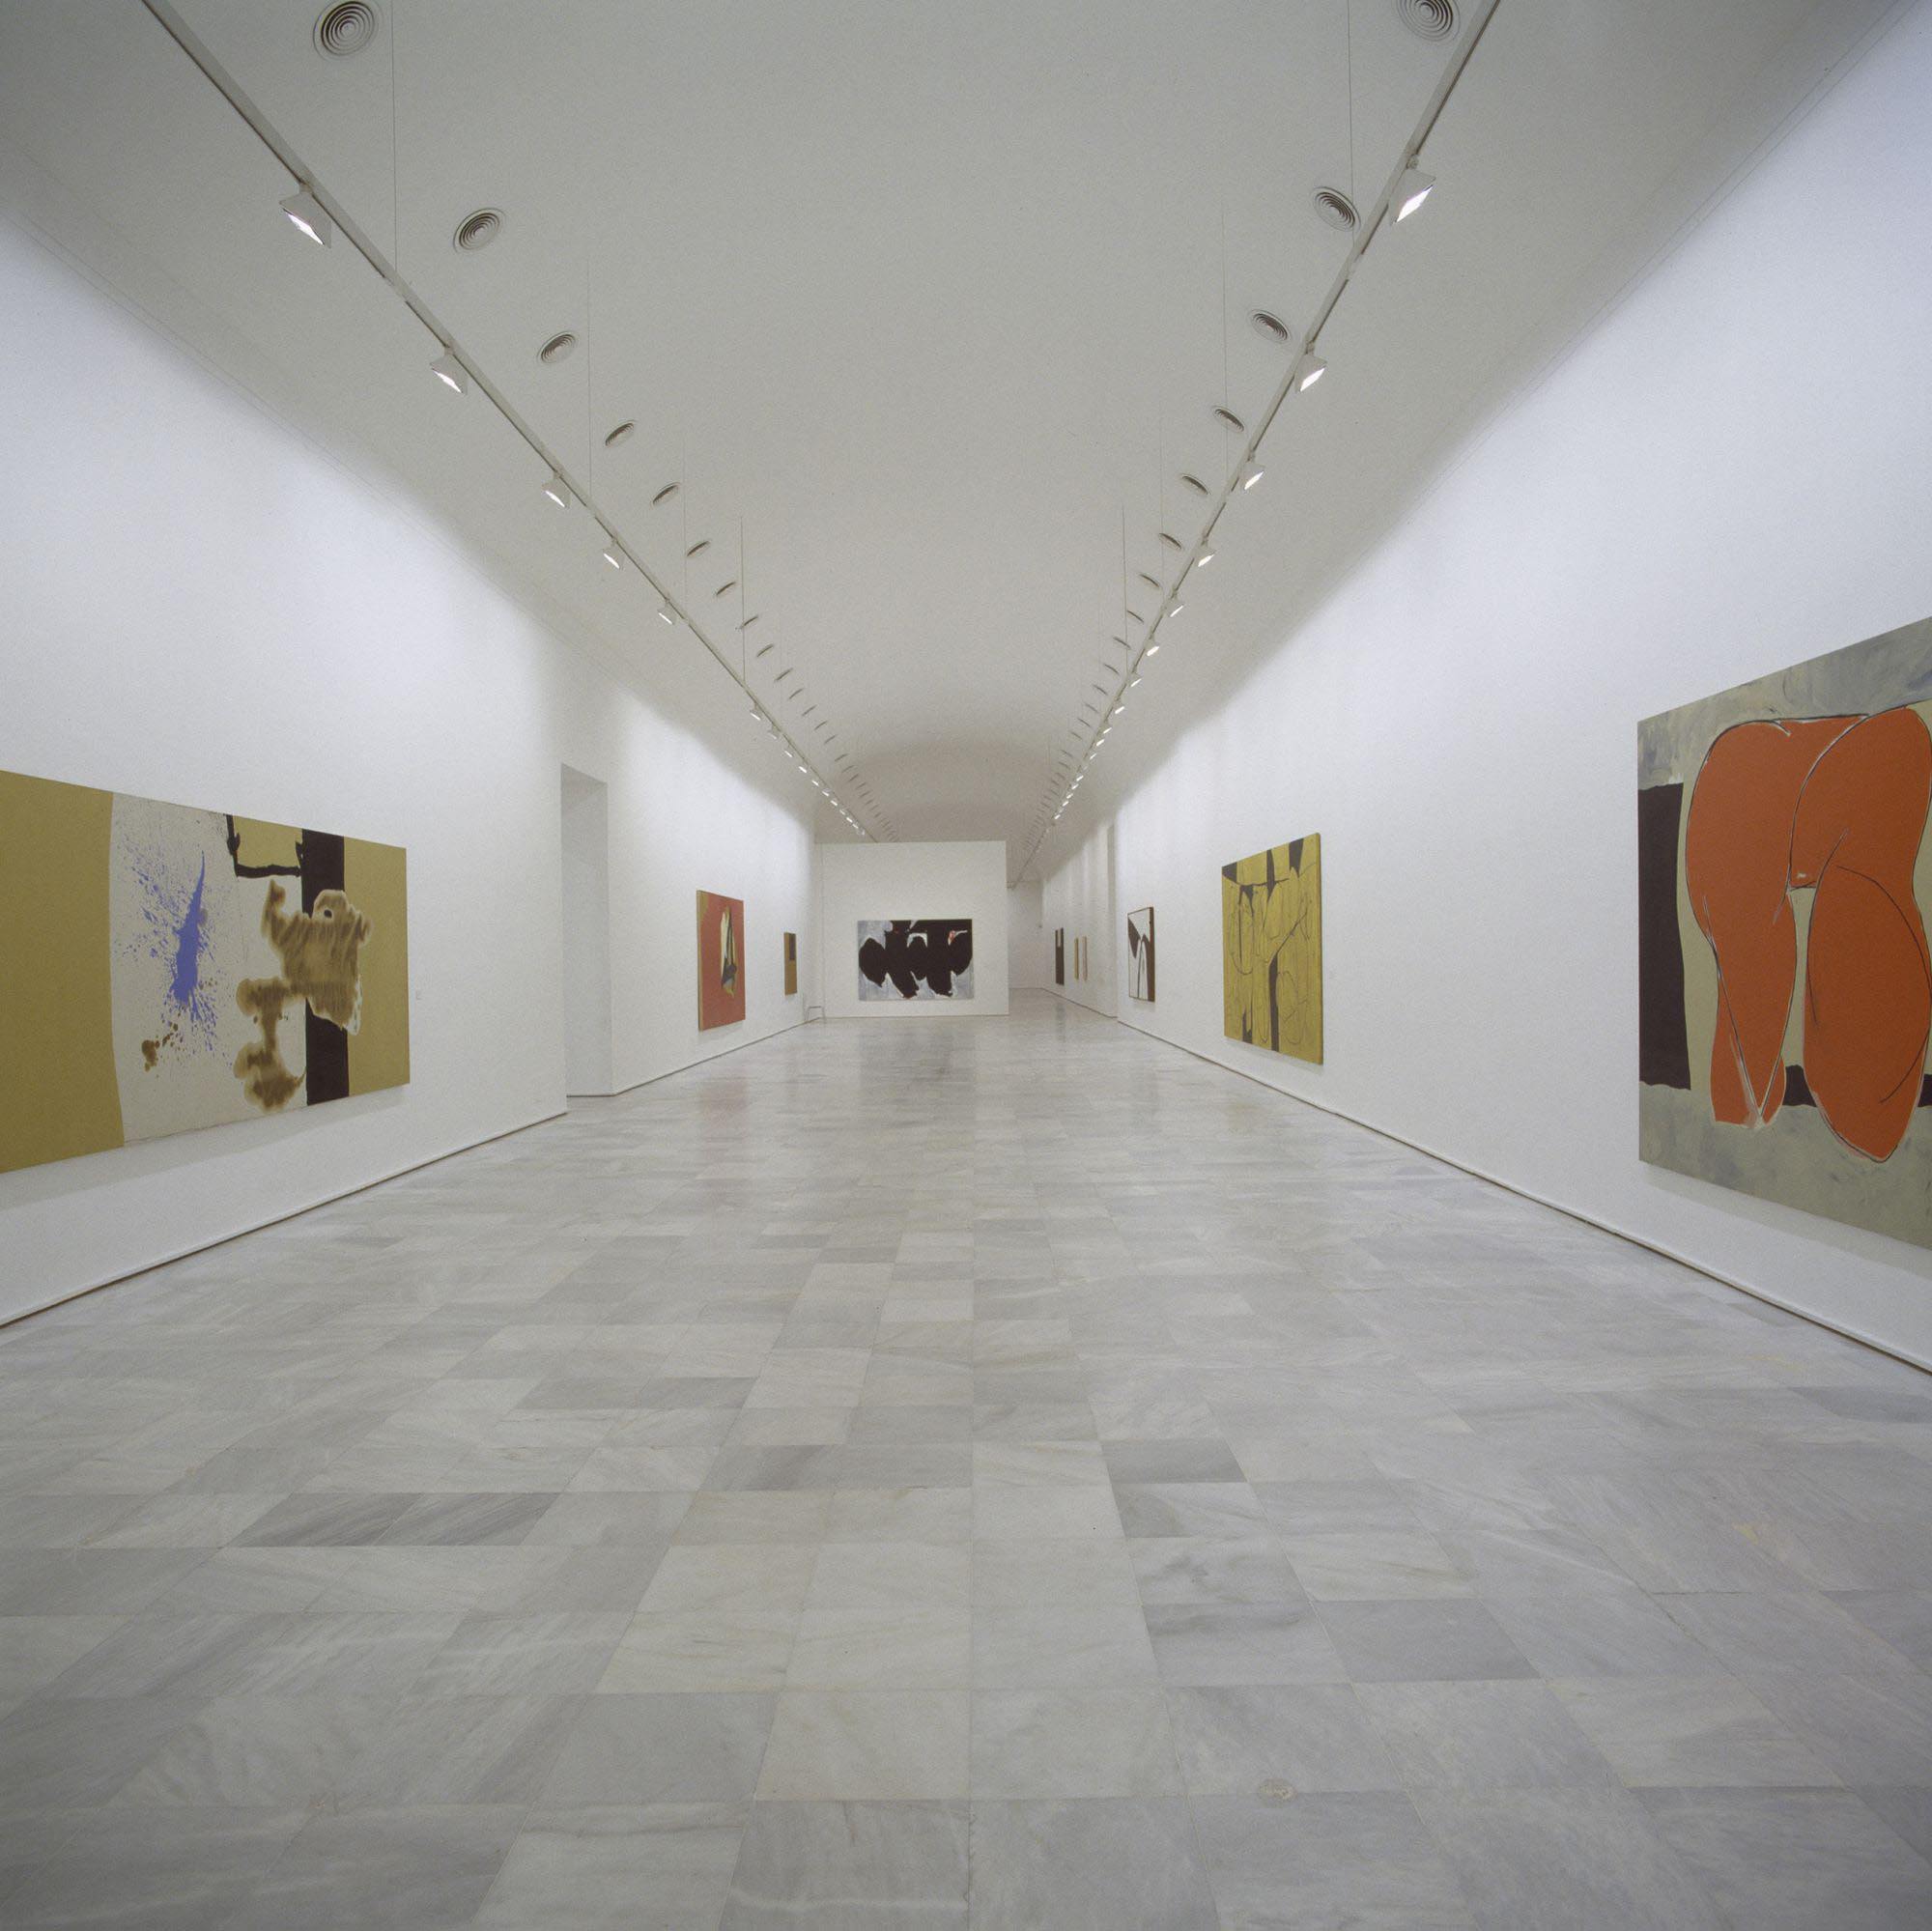 Installation view of the exhibition "Motherwell" at Museo Nacional Centro de Arte Reina Sofía, Madrid, Spain, 1997